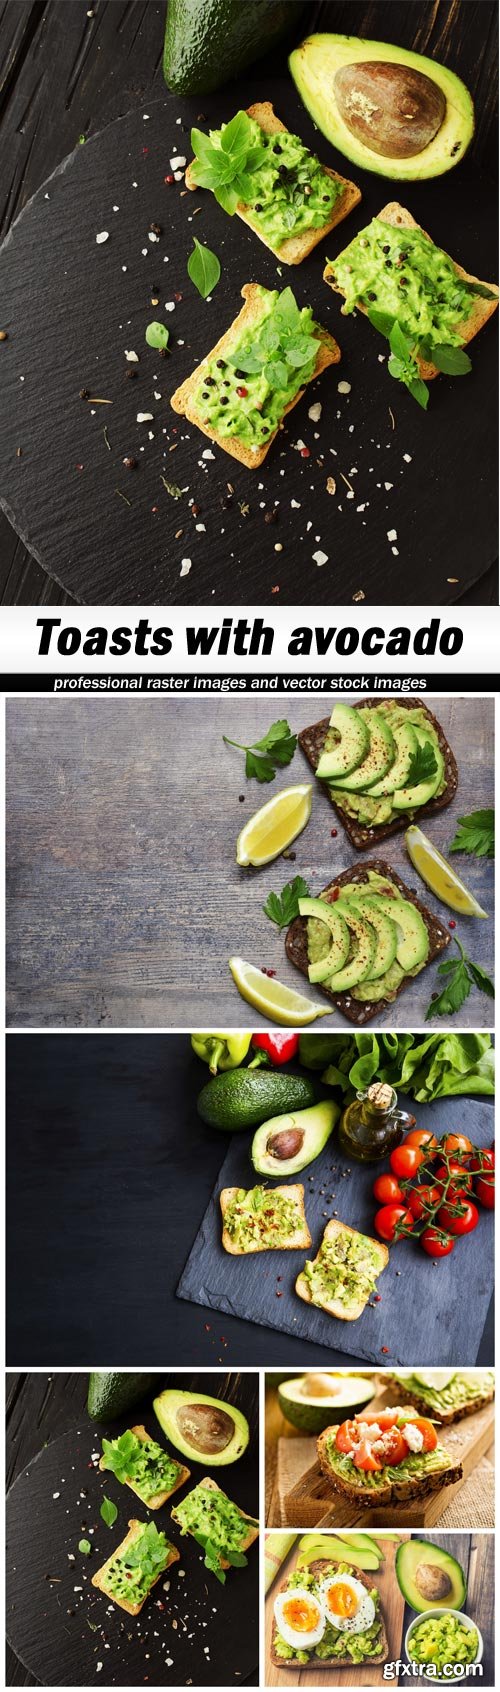 Toasts with avocado - 5 UHQ JPEG